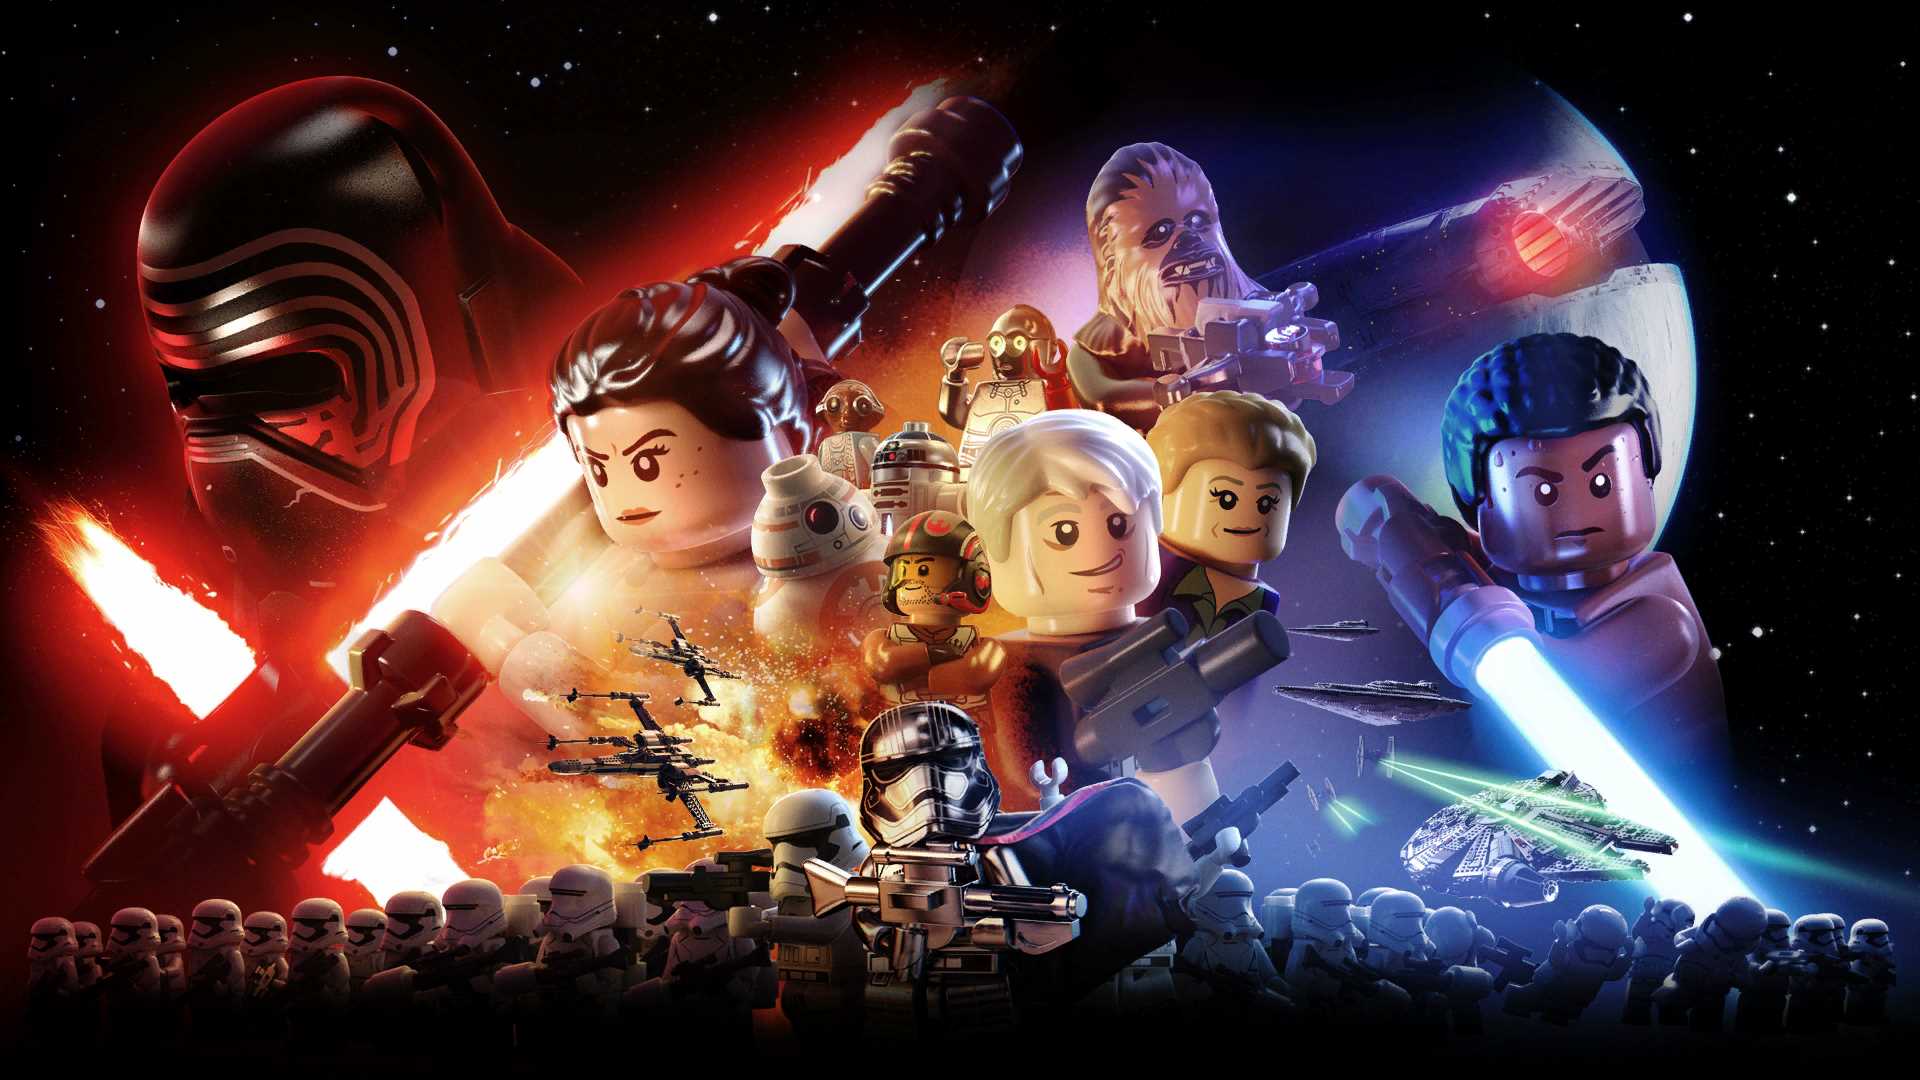 lego star wars the force awakens app